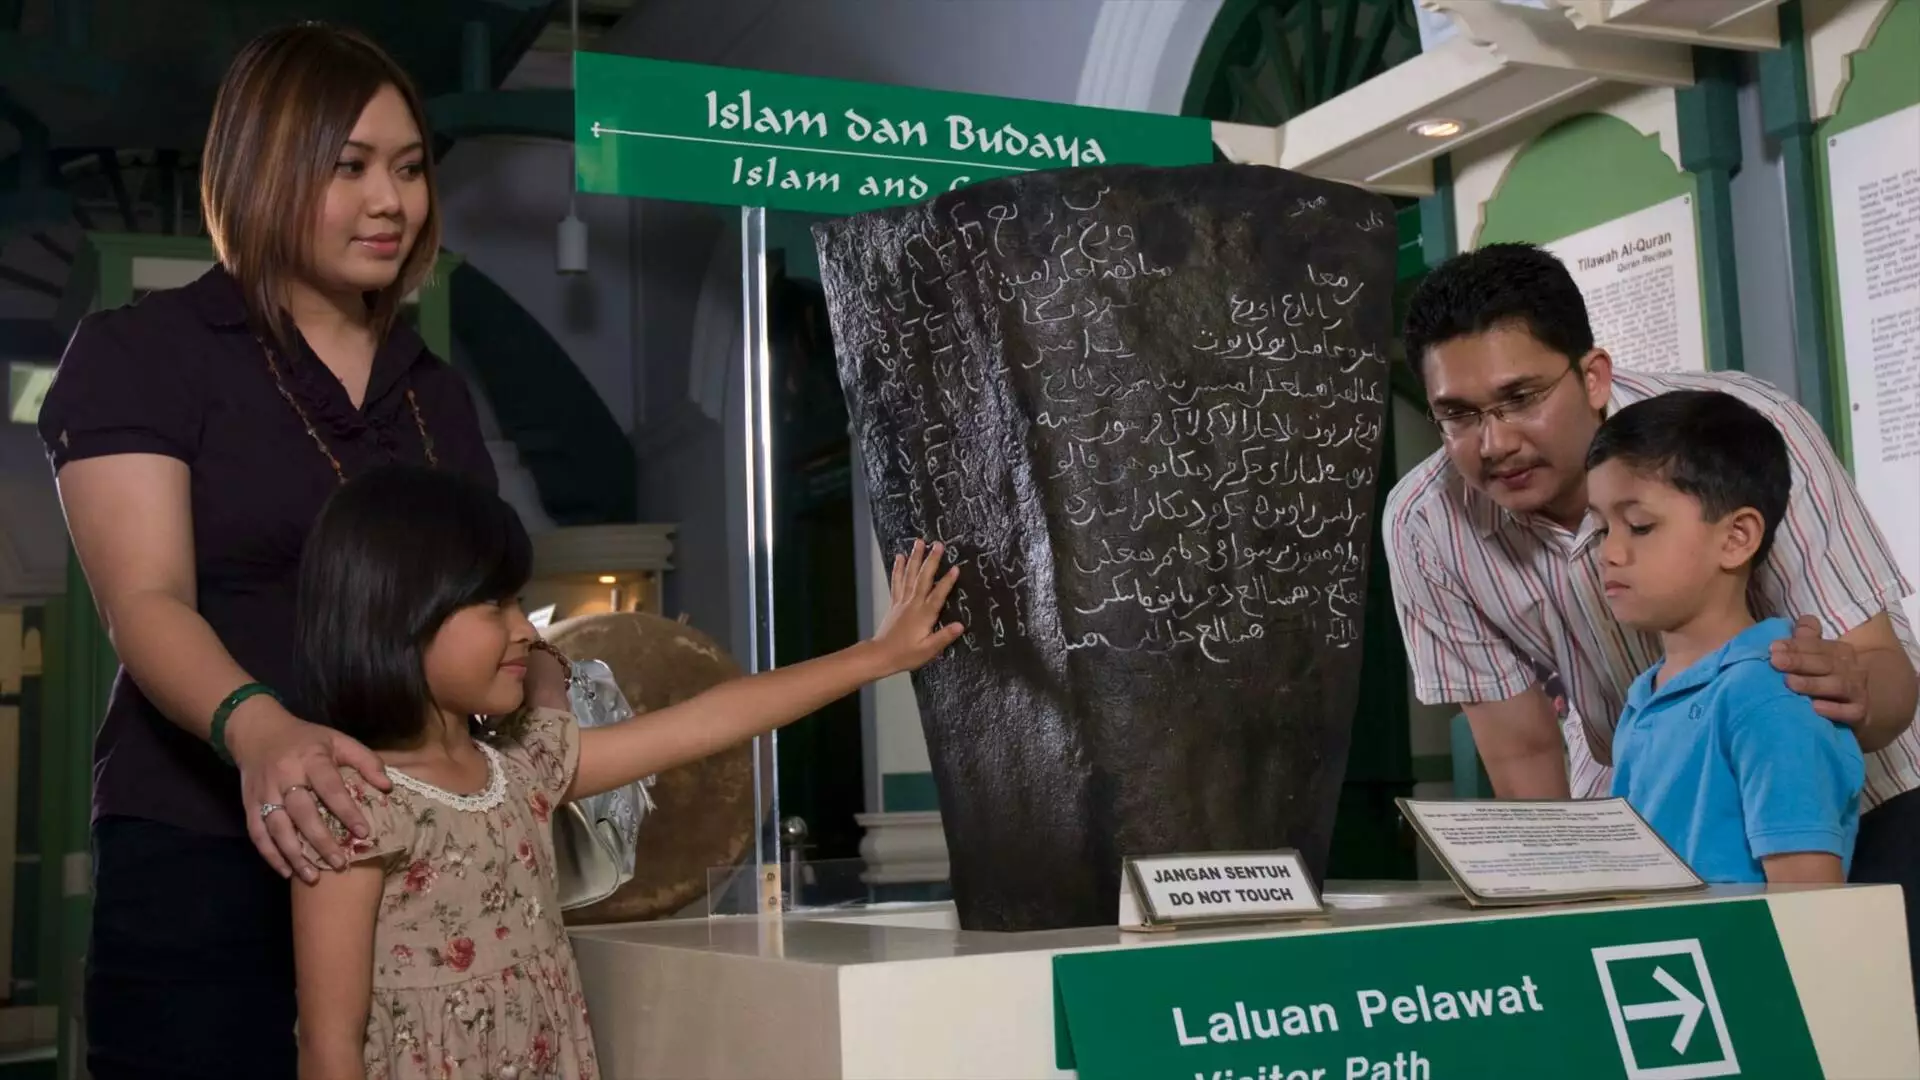 Penang Islamic Museum On Penang Island In Malaysia